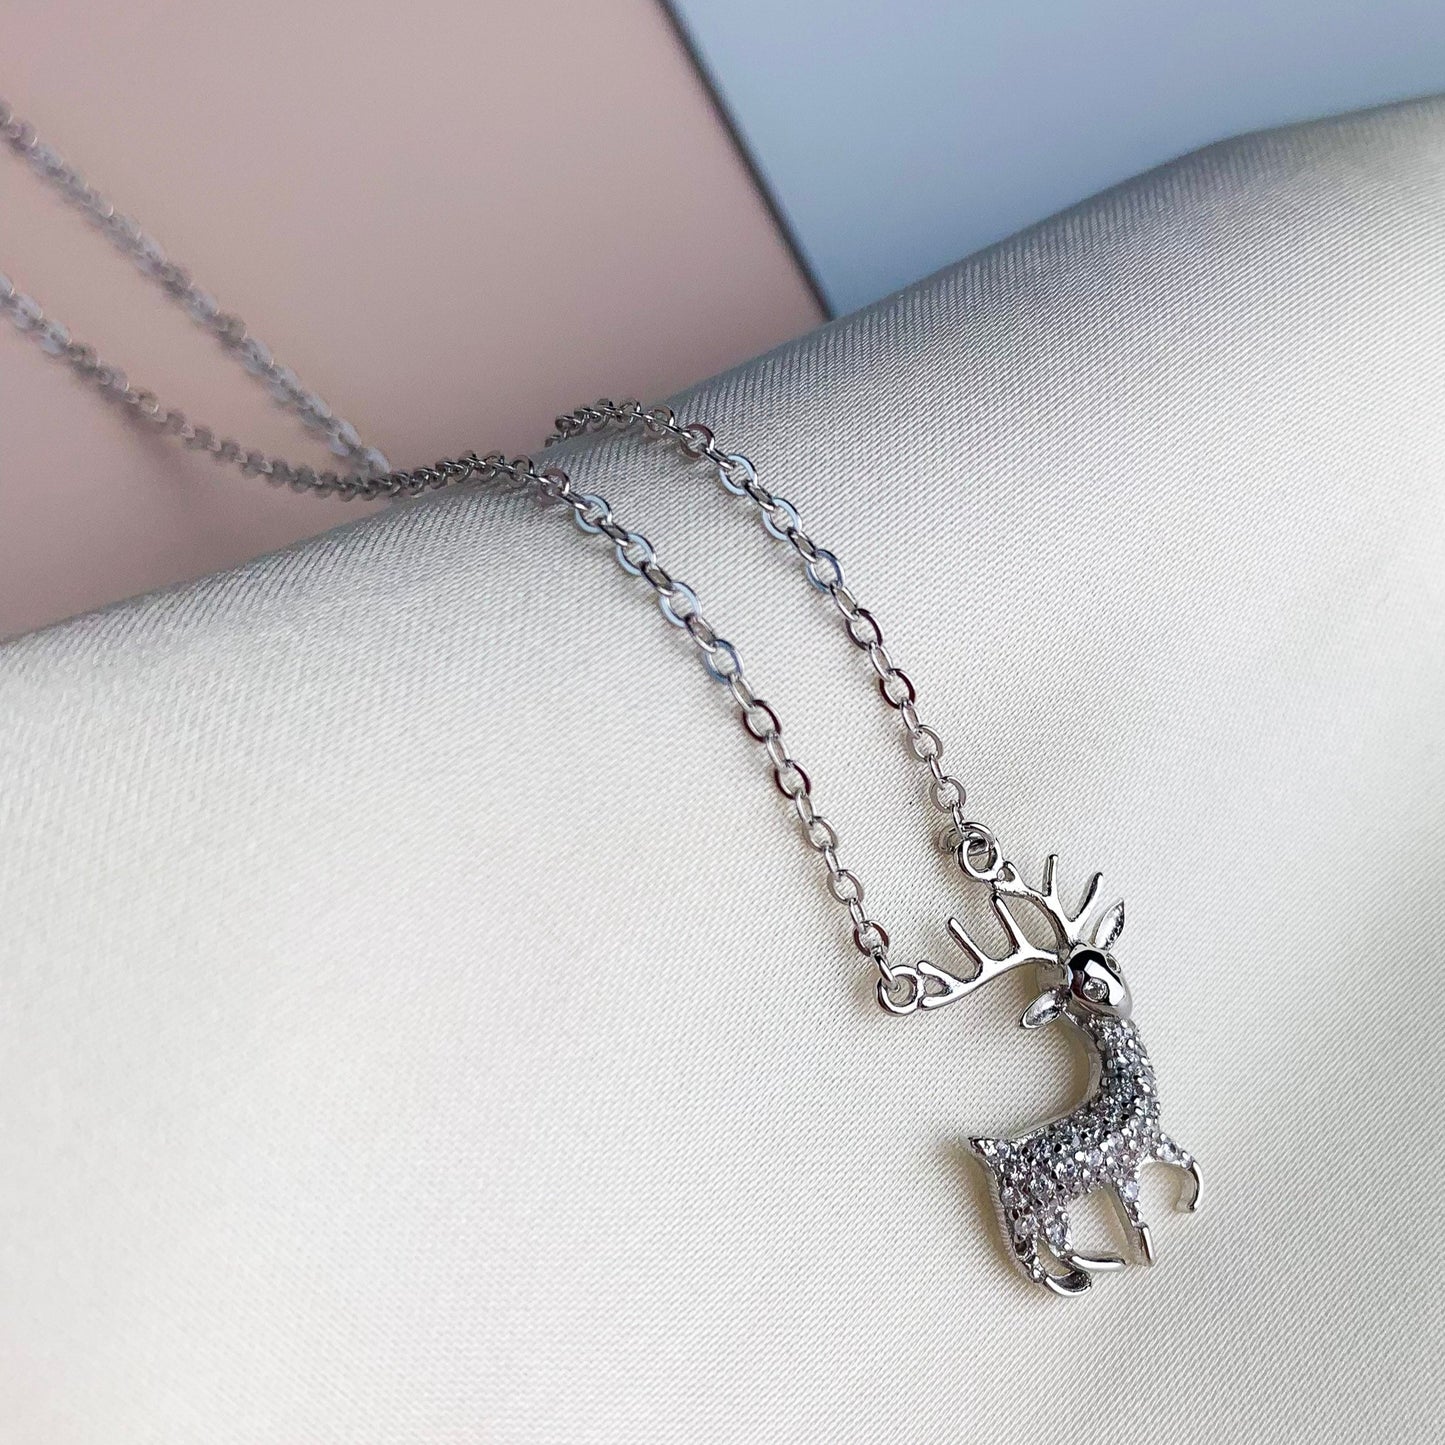 Crystal Deer Pendant Necklace